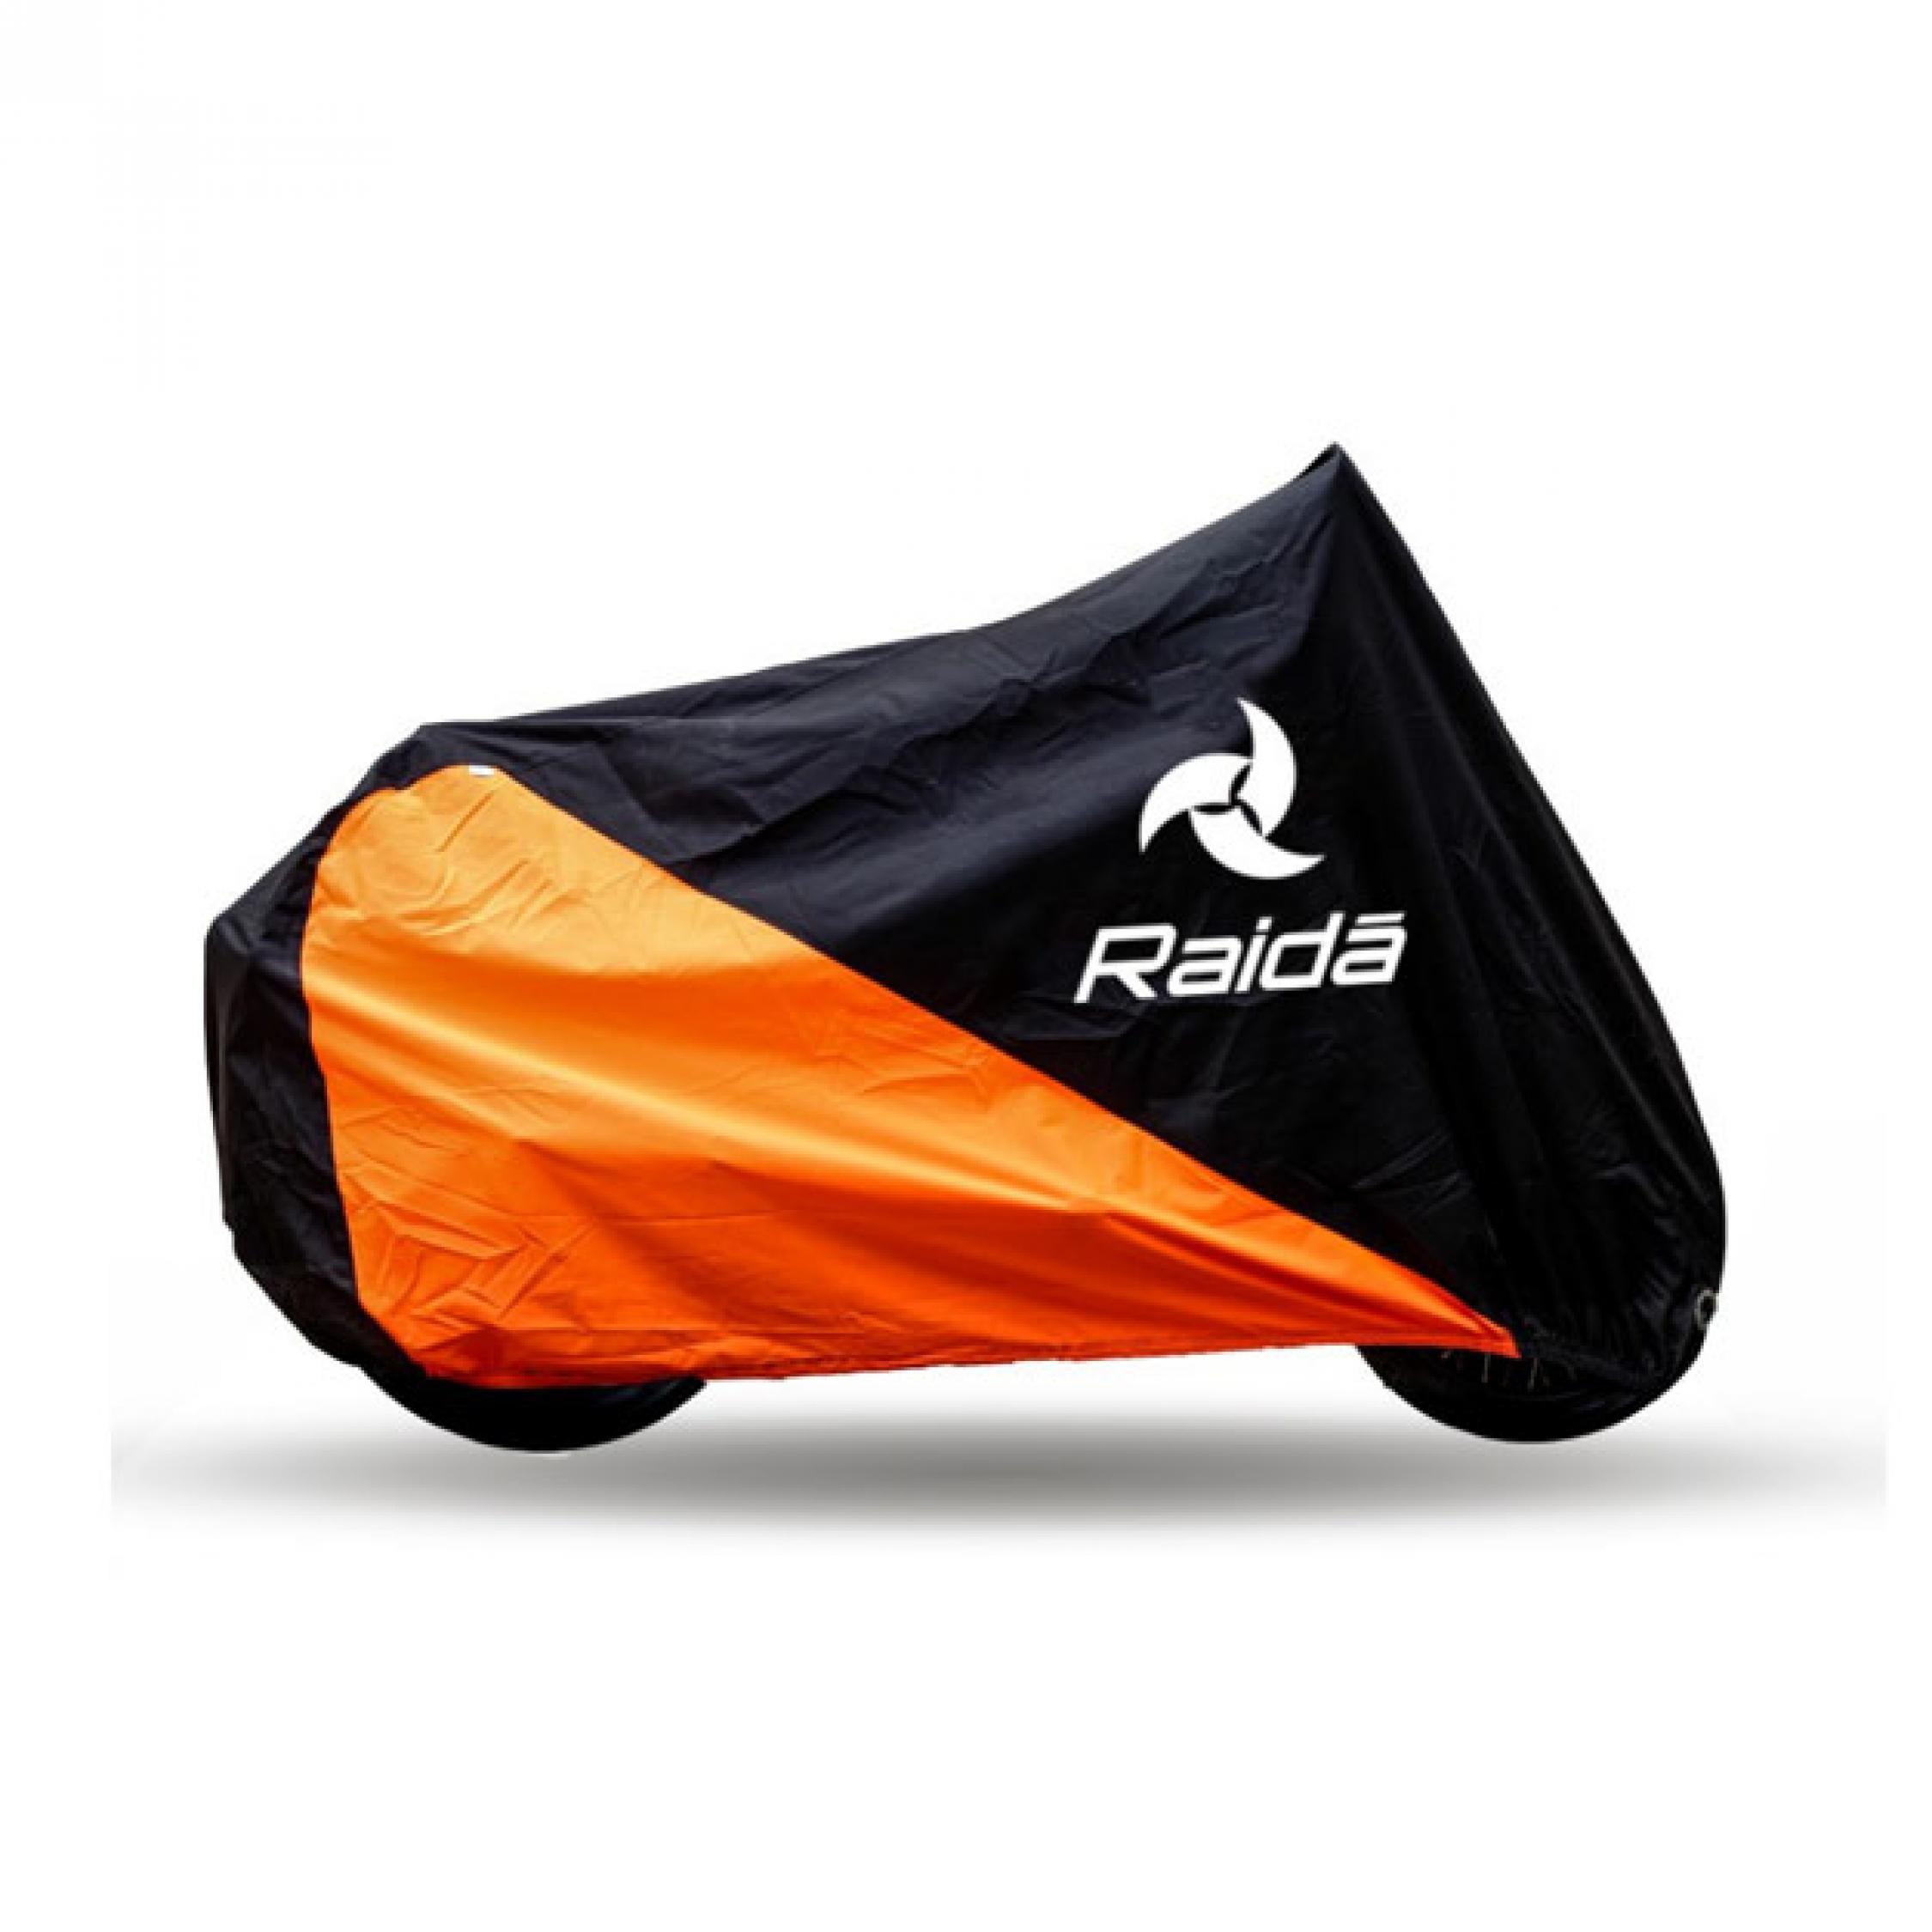 Raida SeasonPro Waterproof Bike Cover